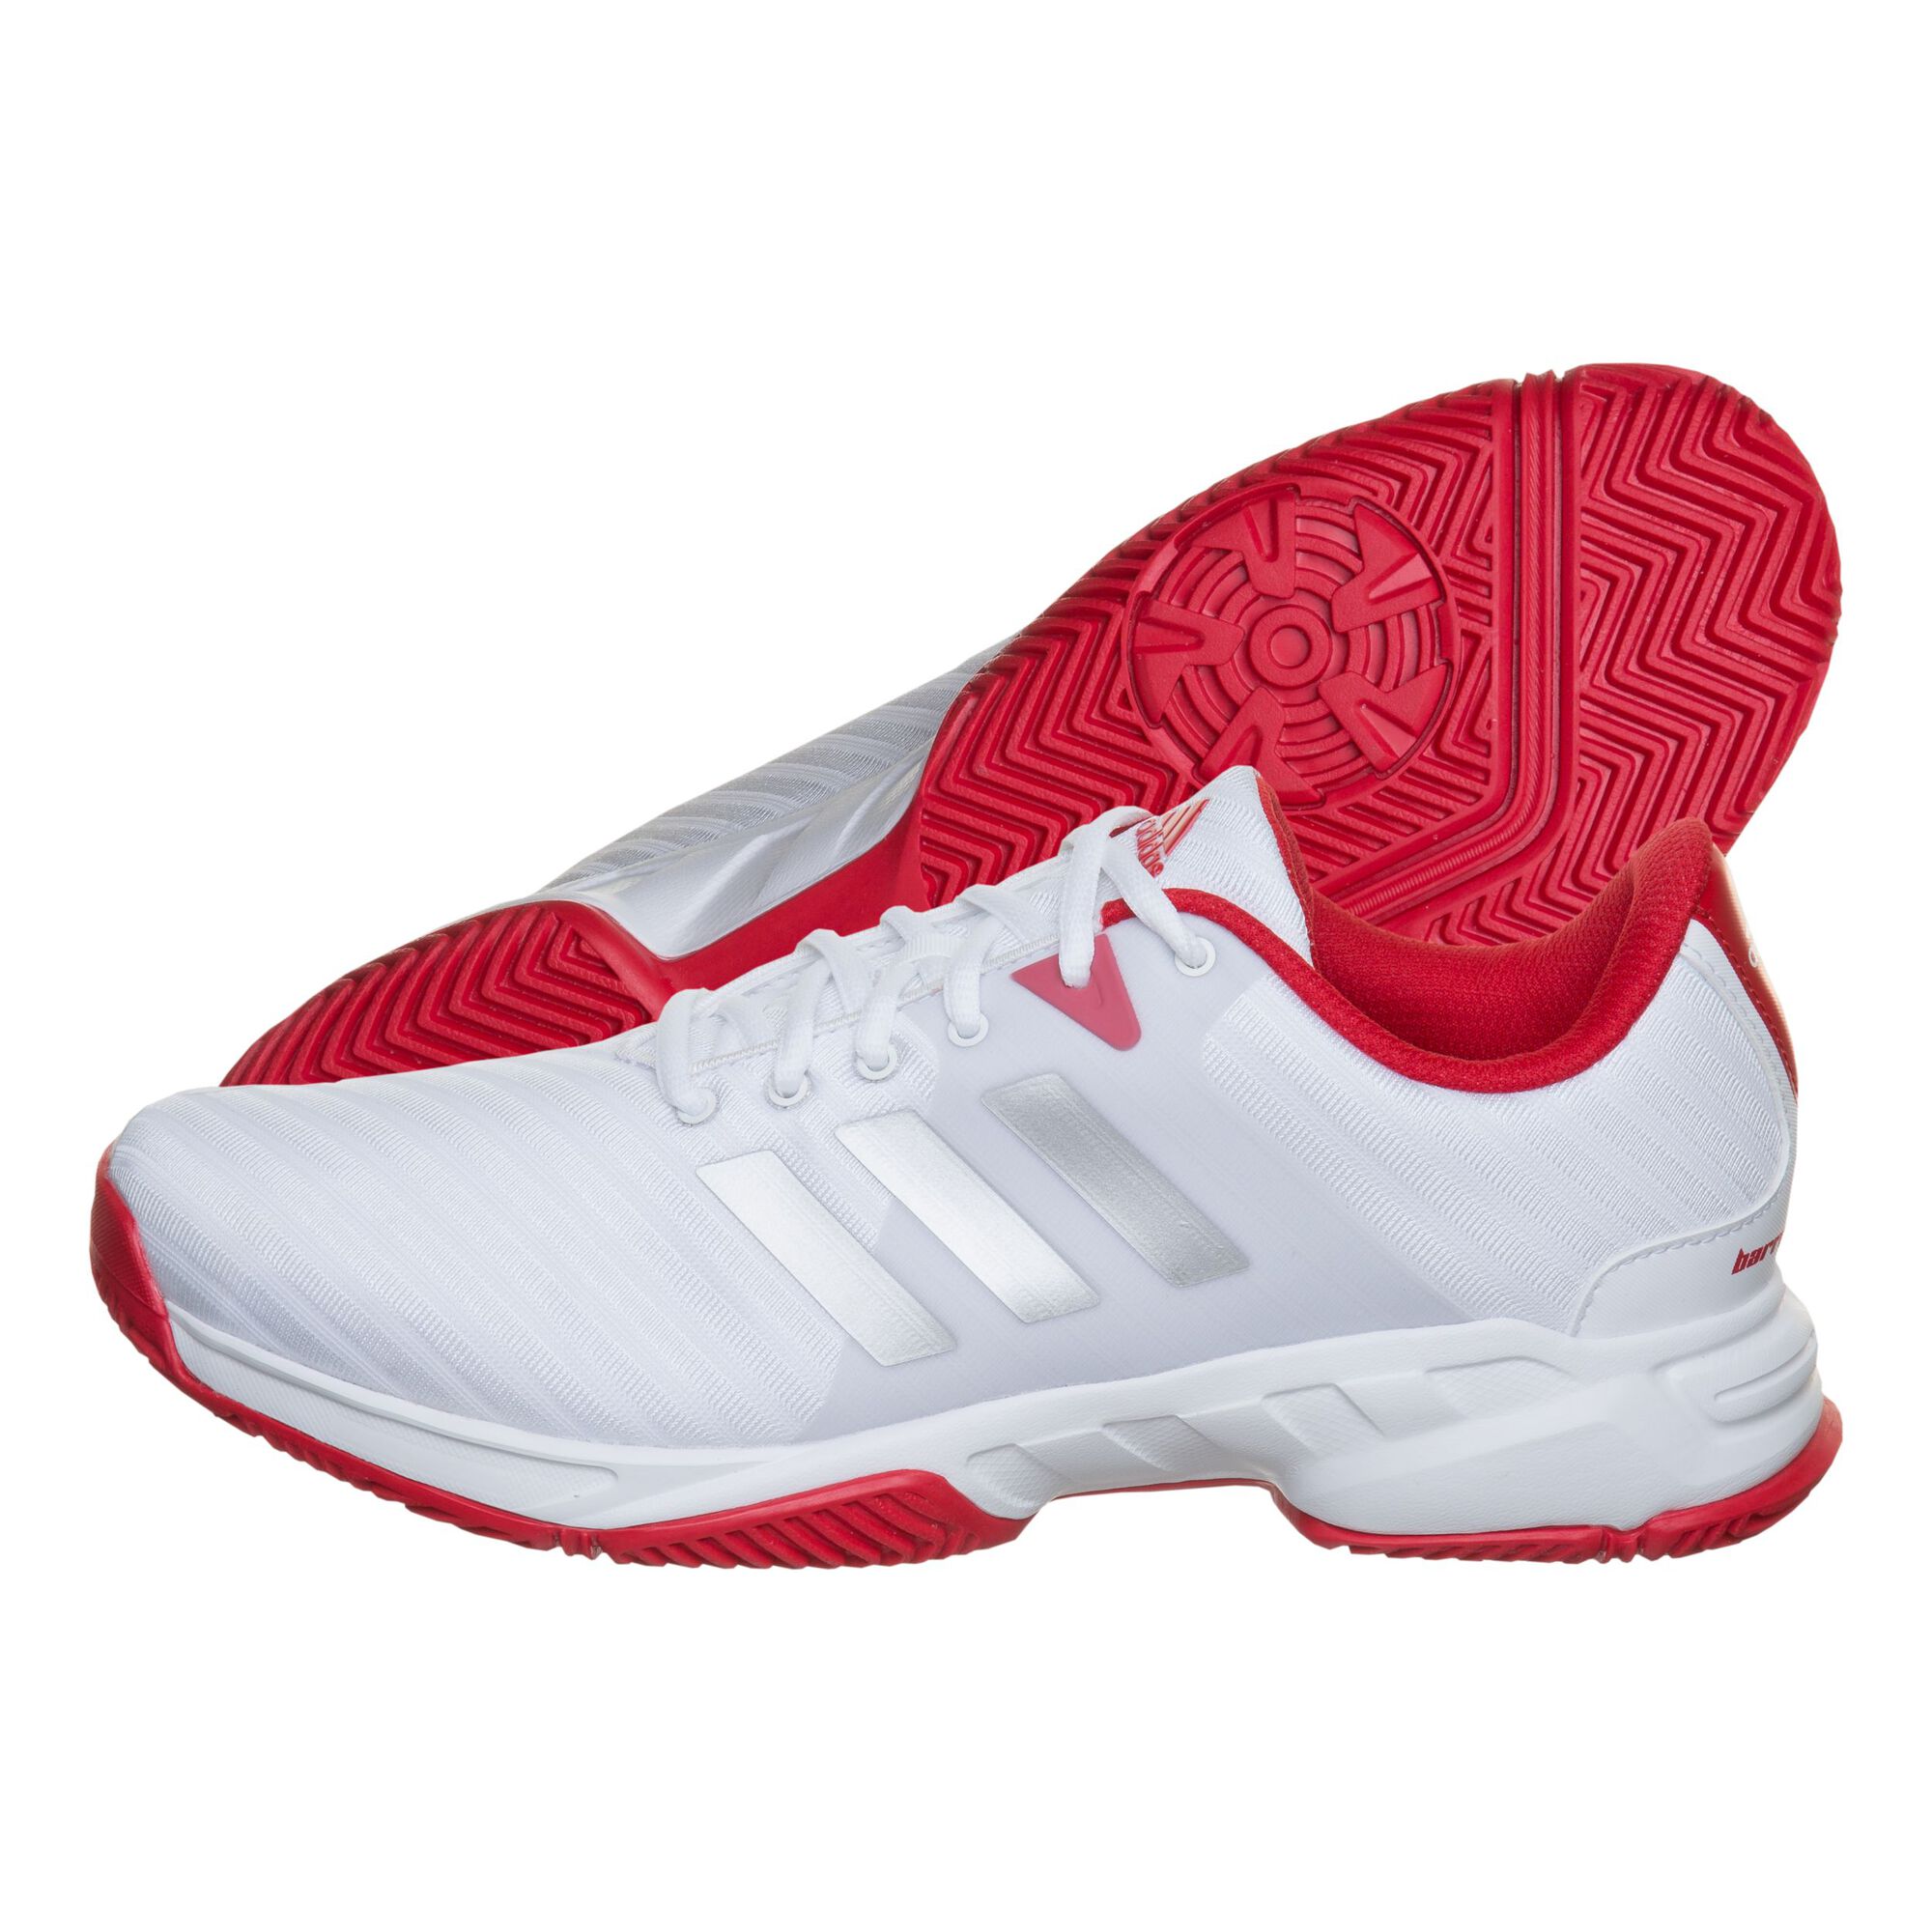 Buy Adidas Barricade Court 3 All Court Shoe Men White Red Online